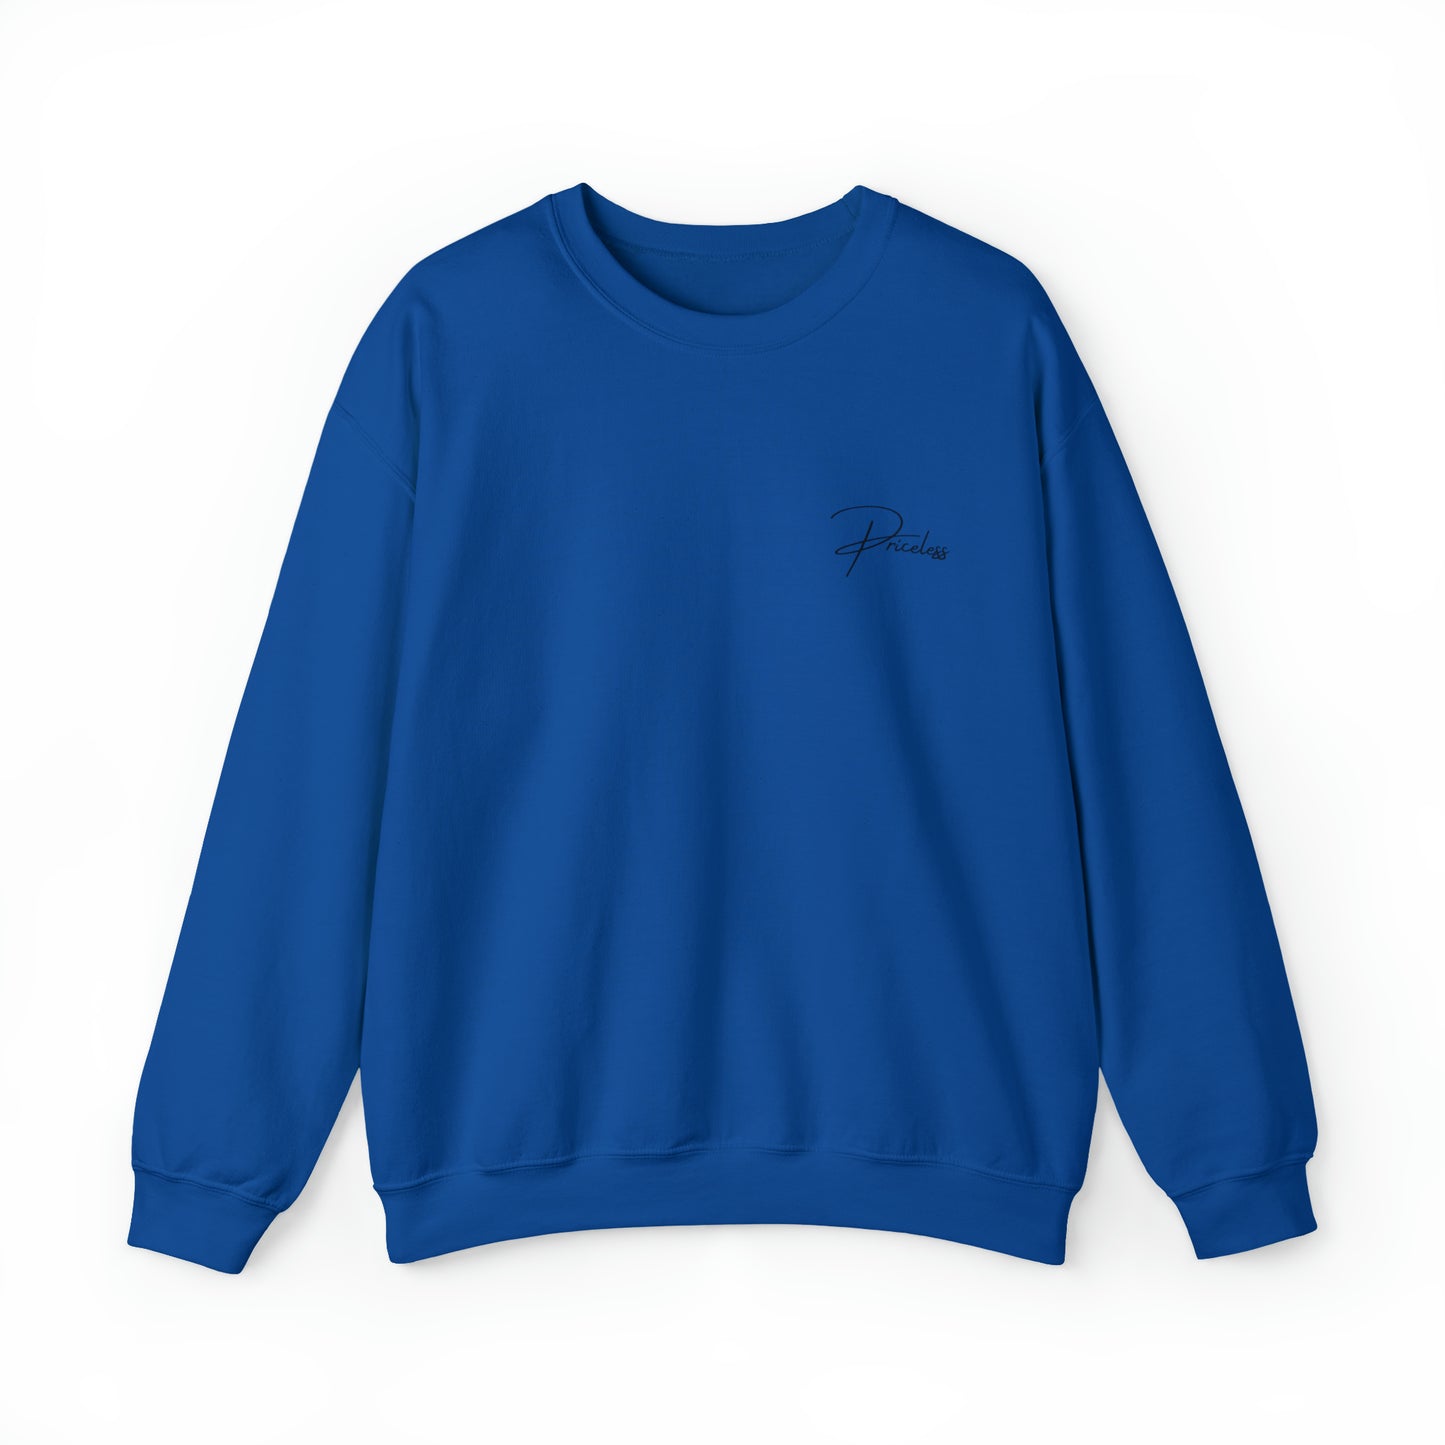 Pricele$$™ Unisex Crewneck Sweatshirt